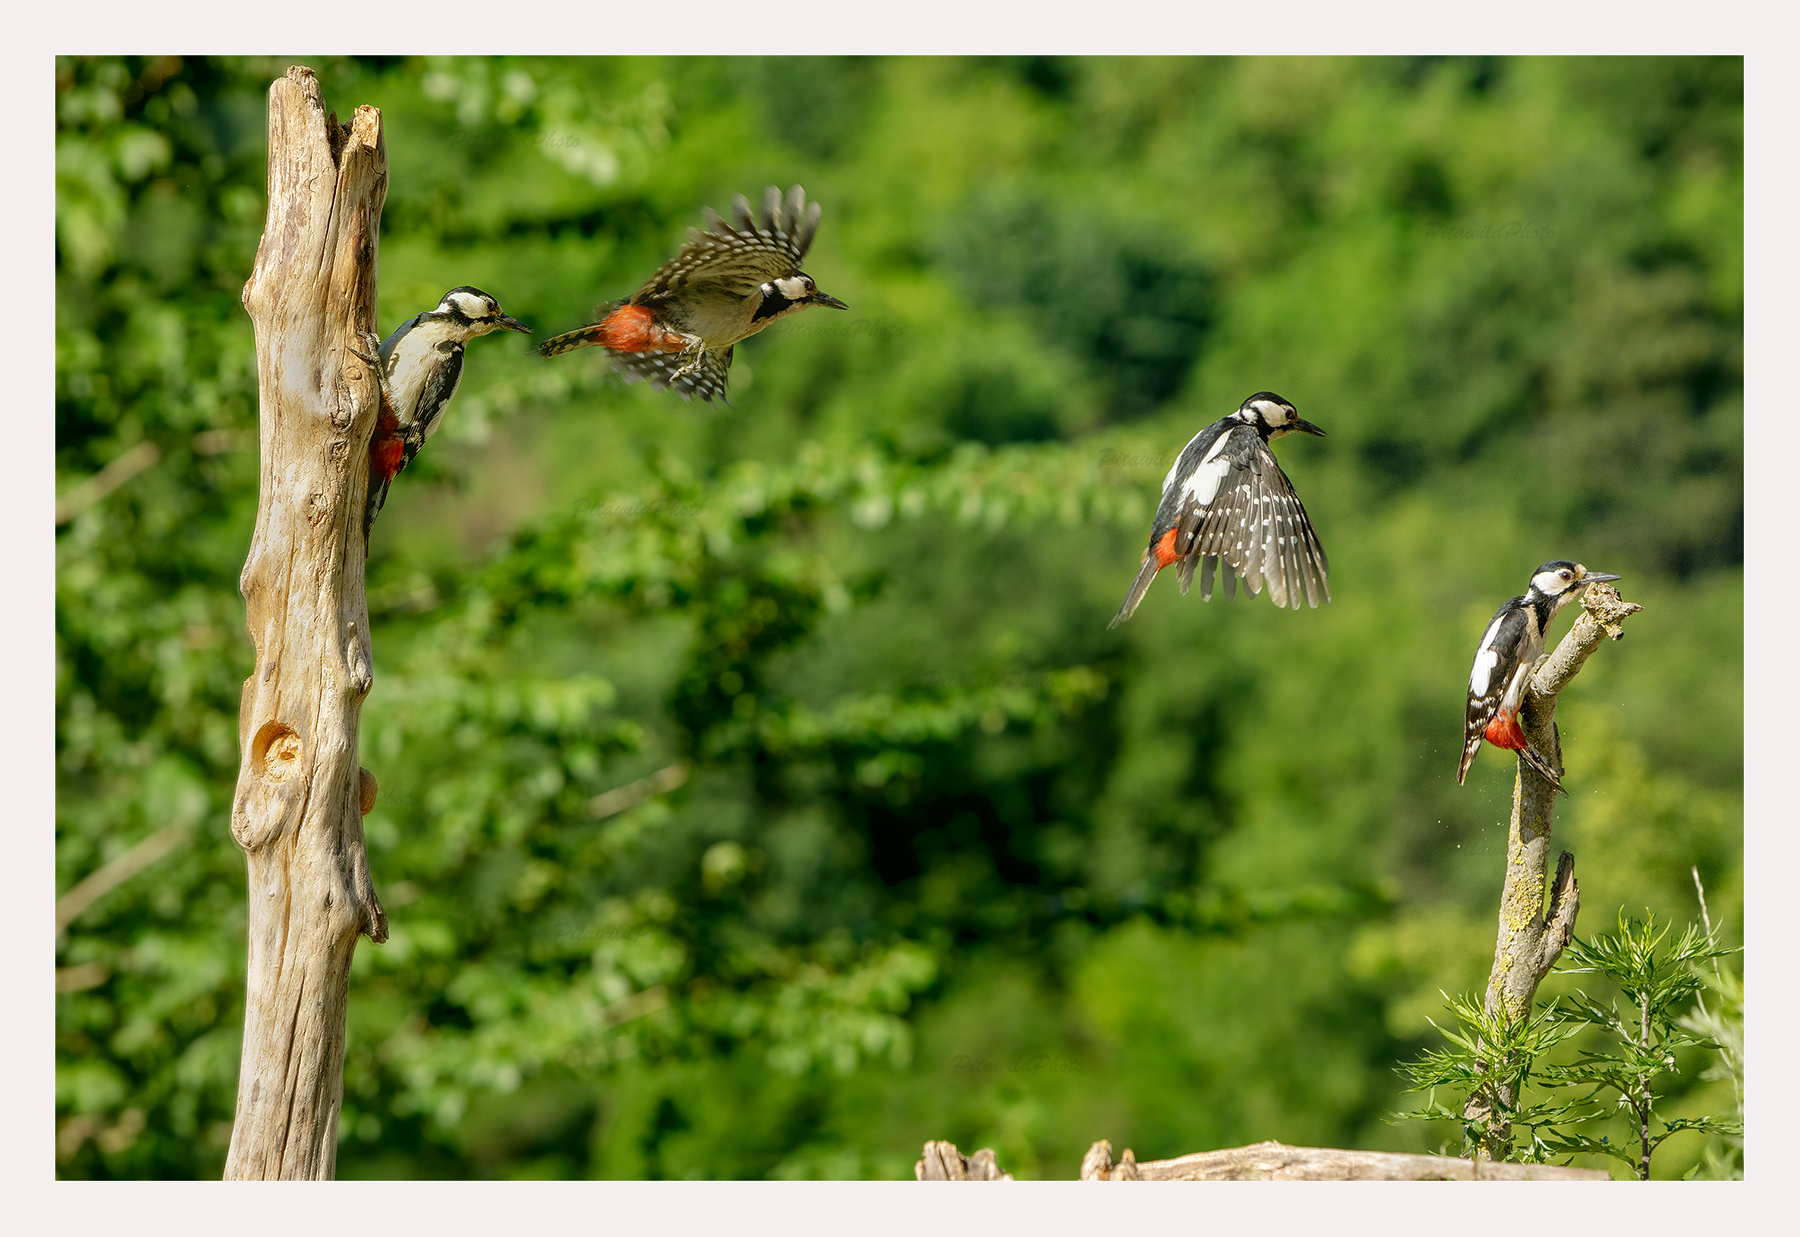 the flight of the Woodpecker...